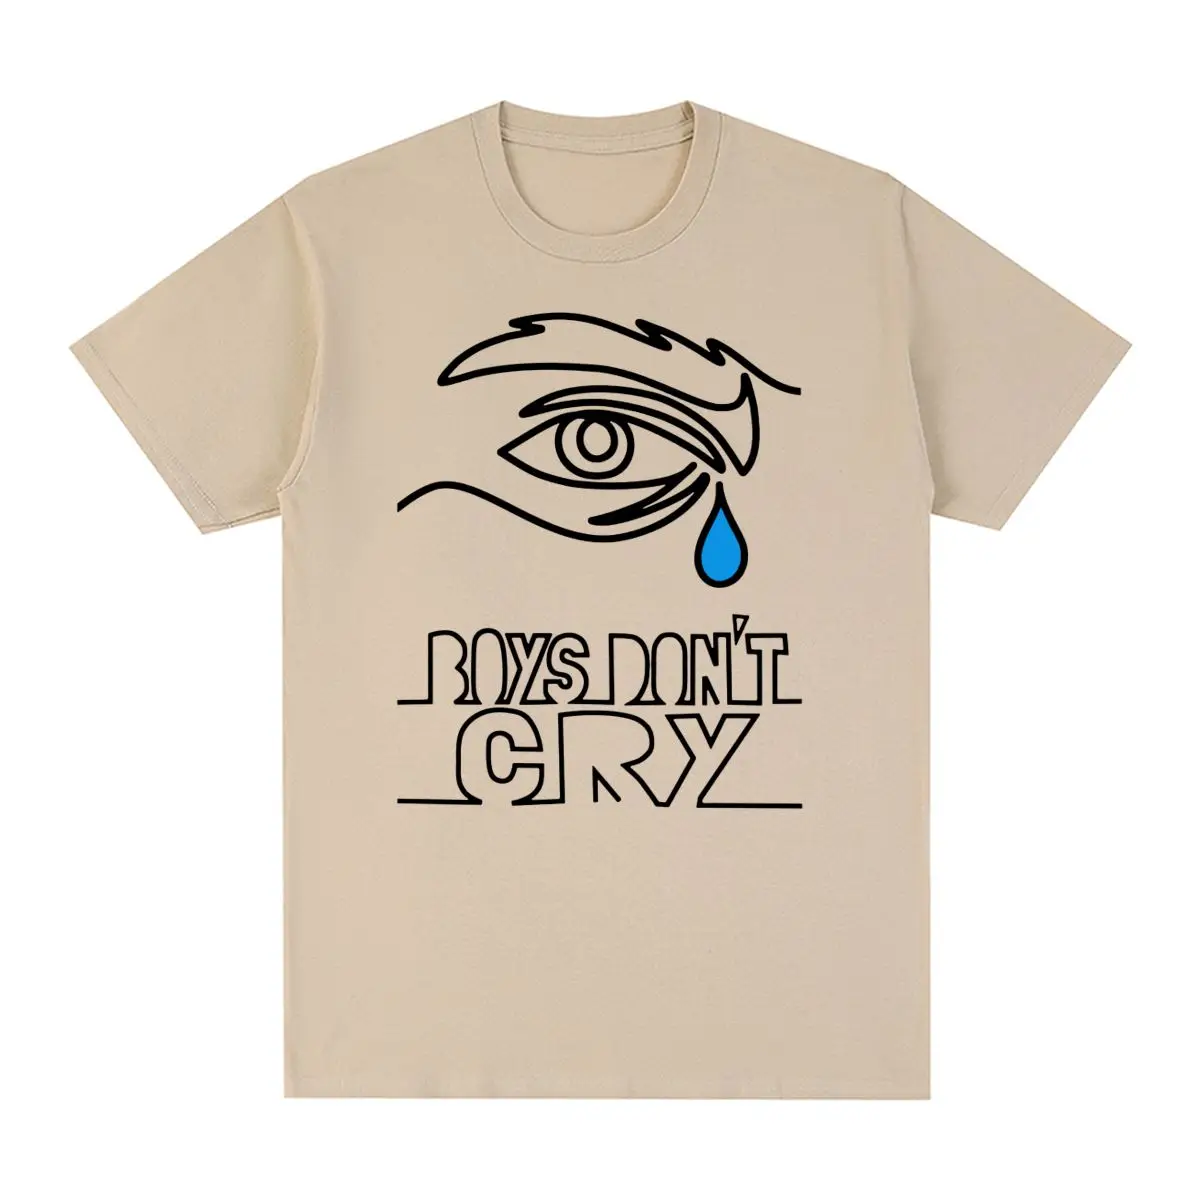 

The Cure Boys Don't Cry Vintage T-shirt Disintegration Robert Smith 1986 Cotton Men T shirt New Tee Tshirt Womens Tops